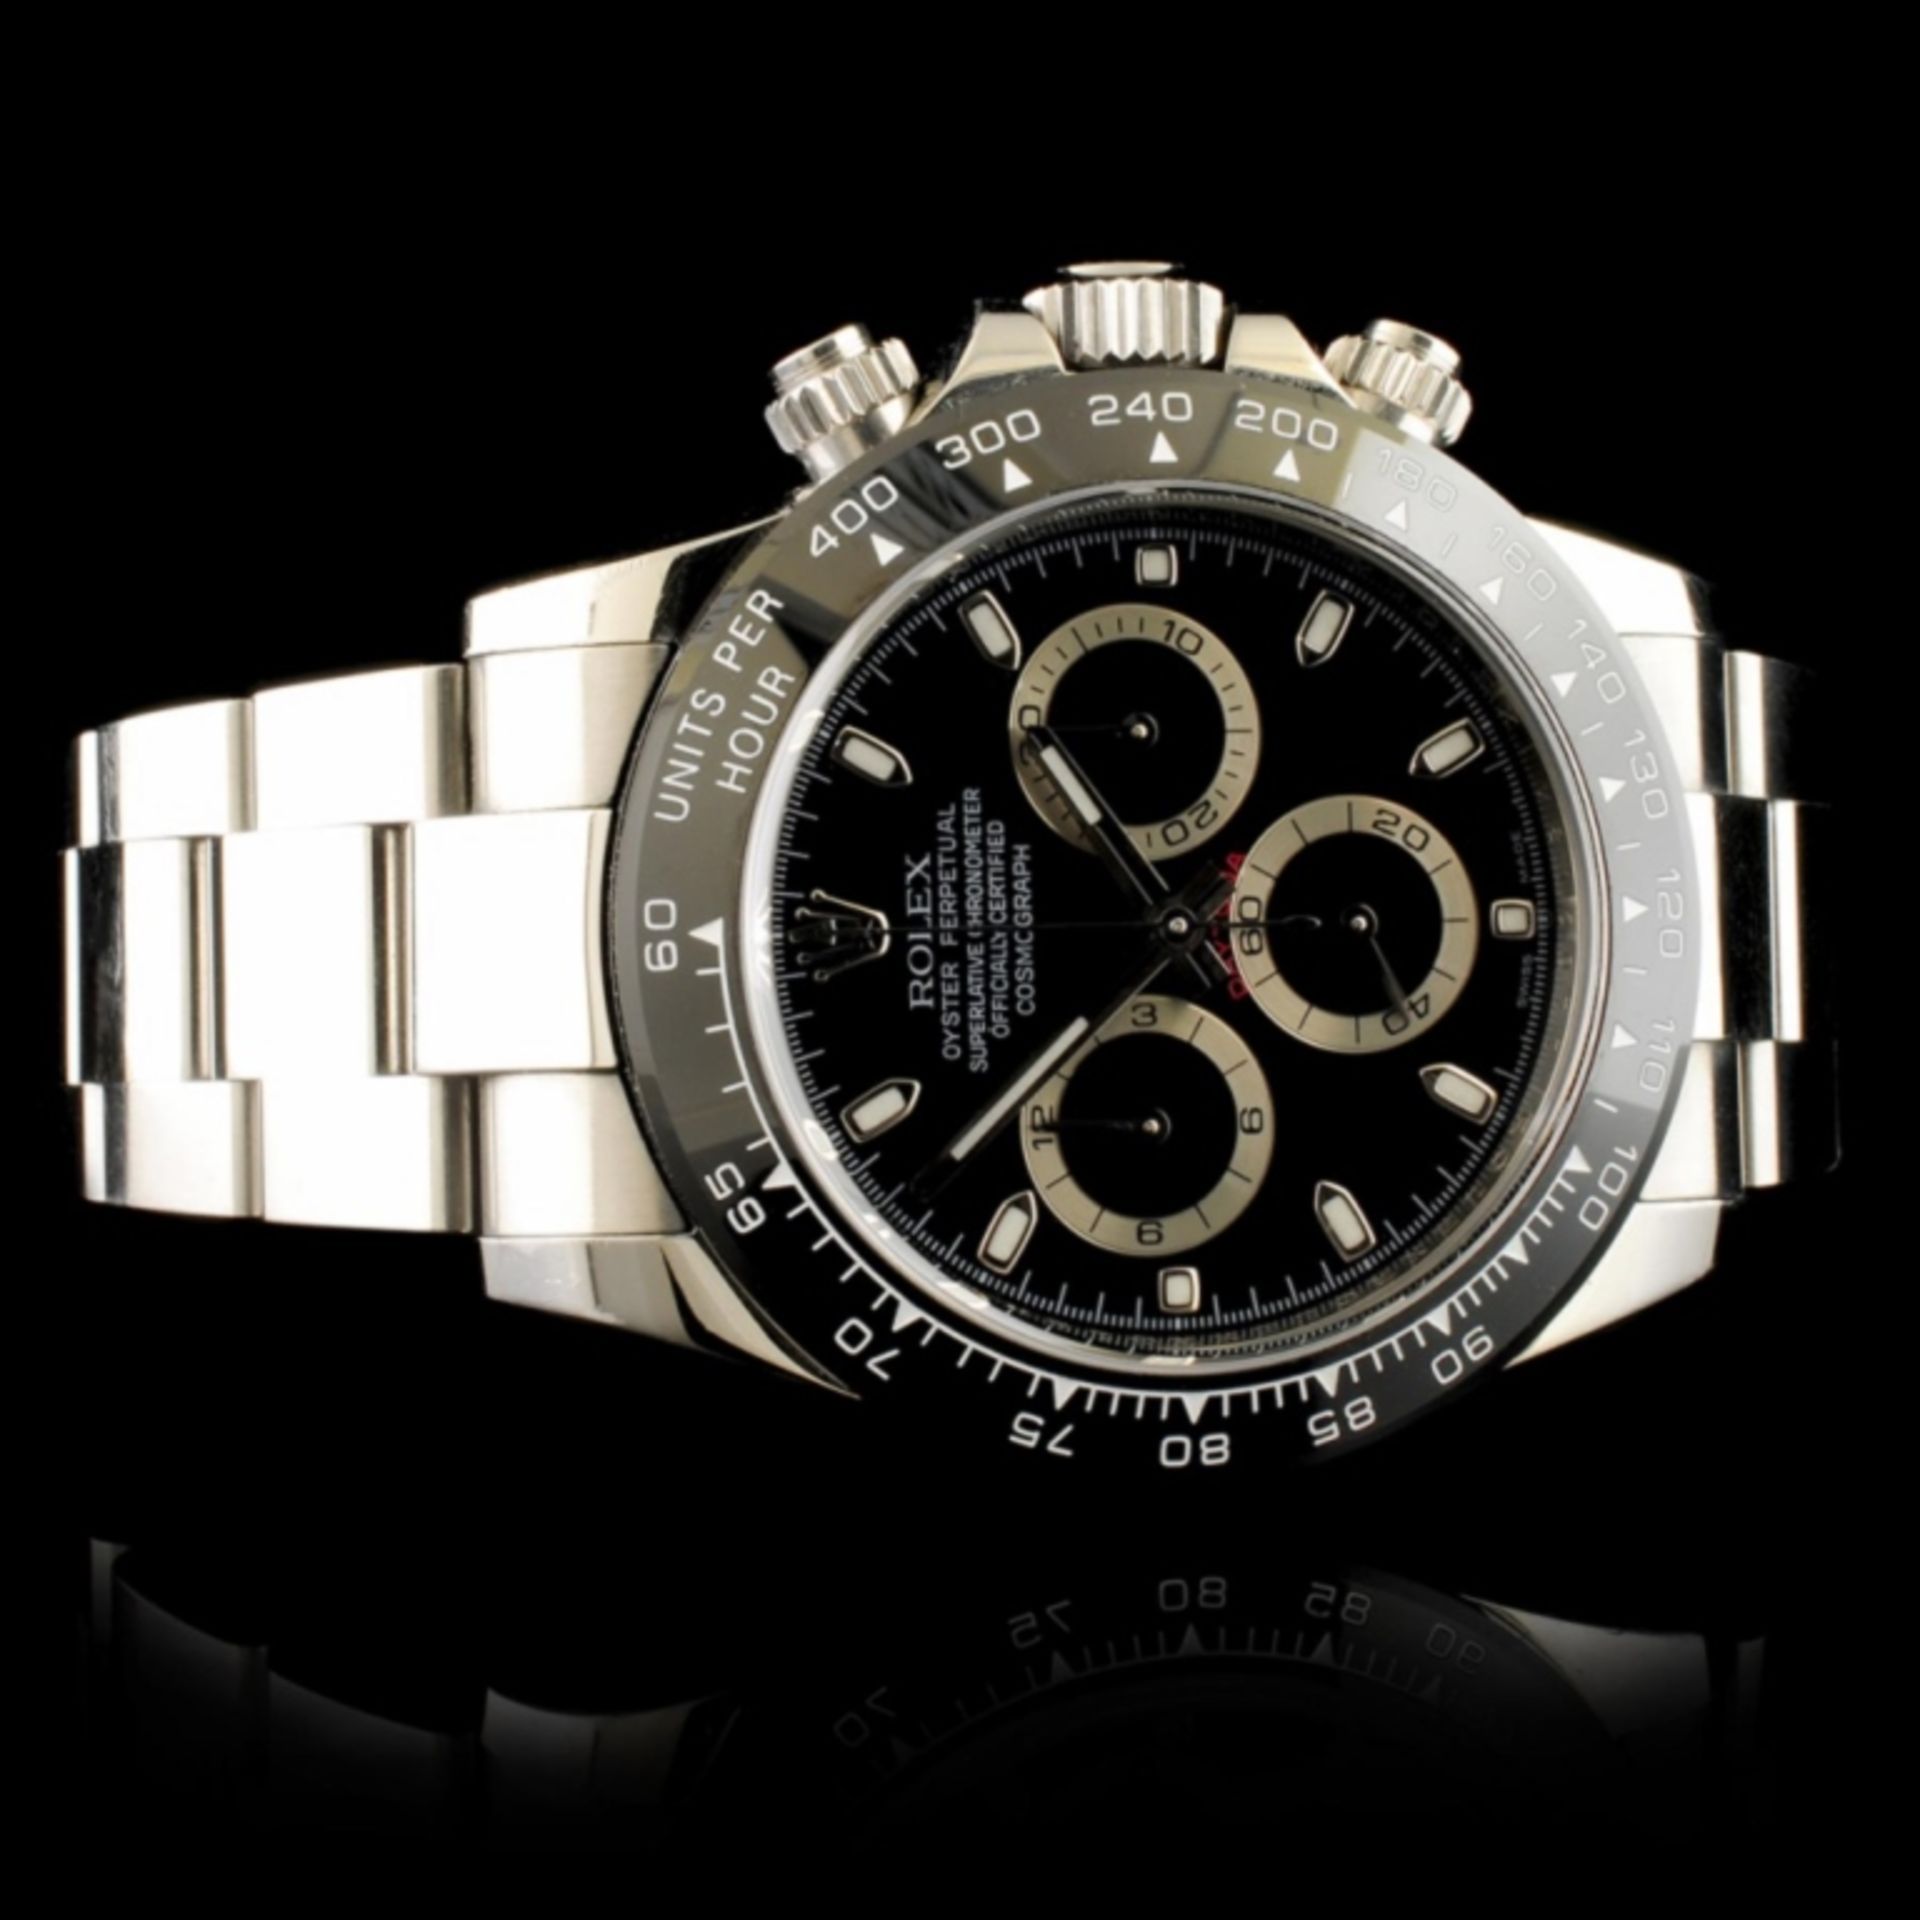 Rolex DAYTONA 116520 Ceramic Tachymeter 40MM Watch - Image 4 of 6